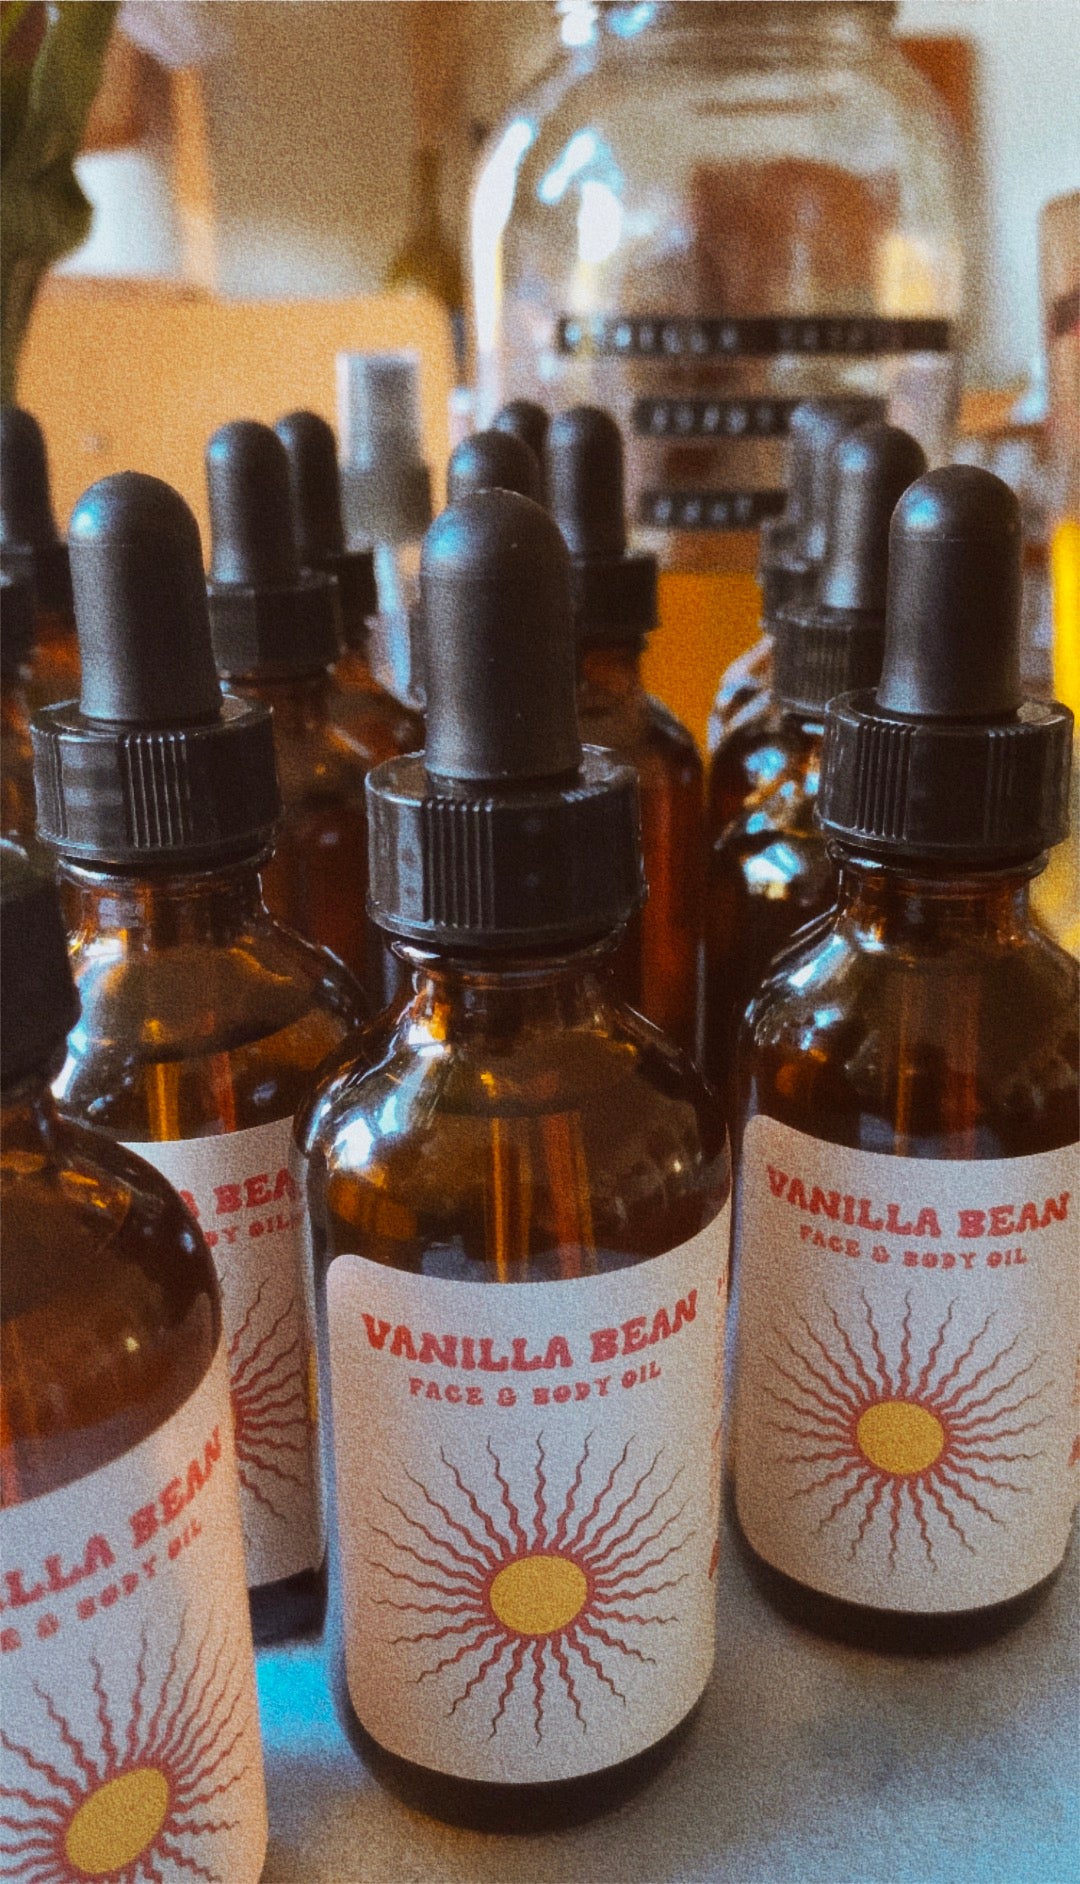 Vanilla Bean Face & Body Oil